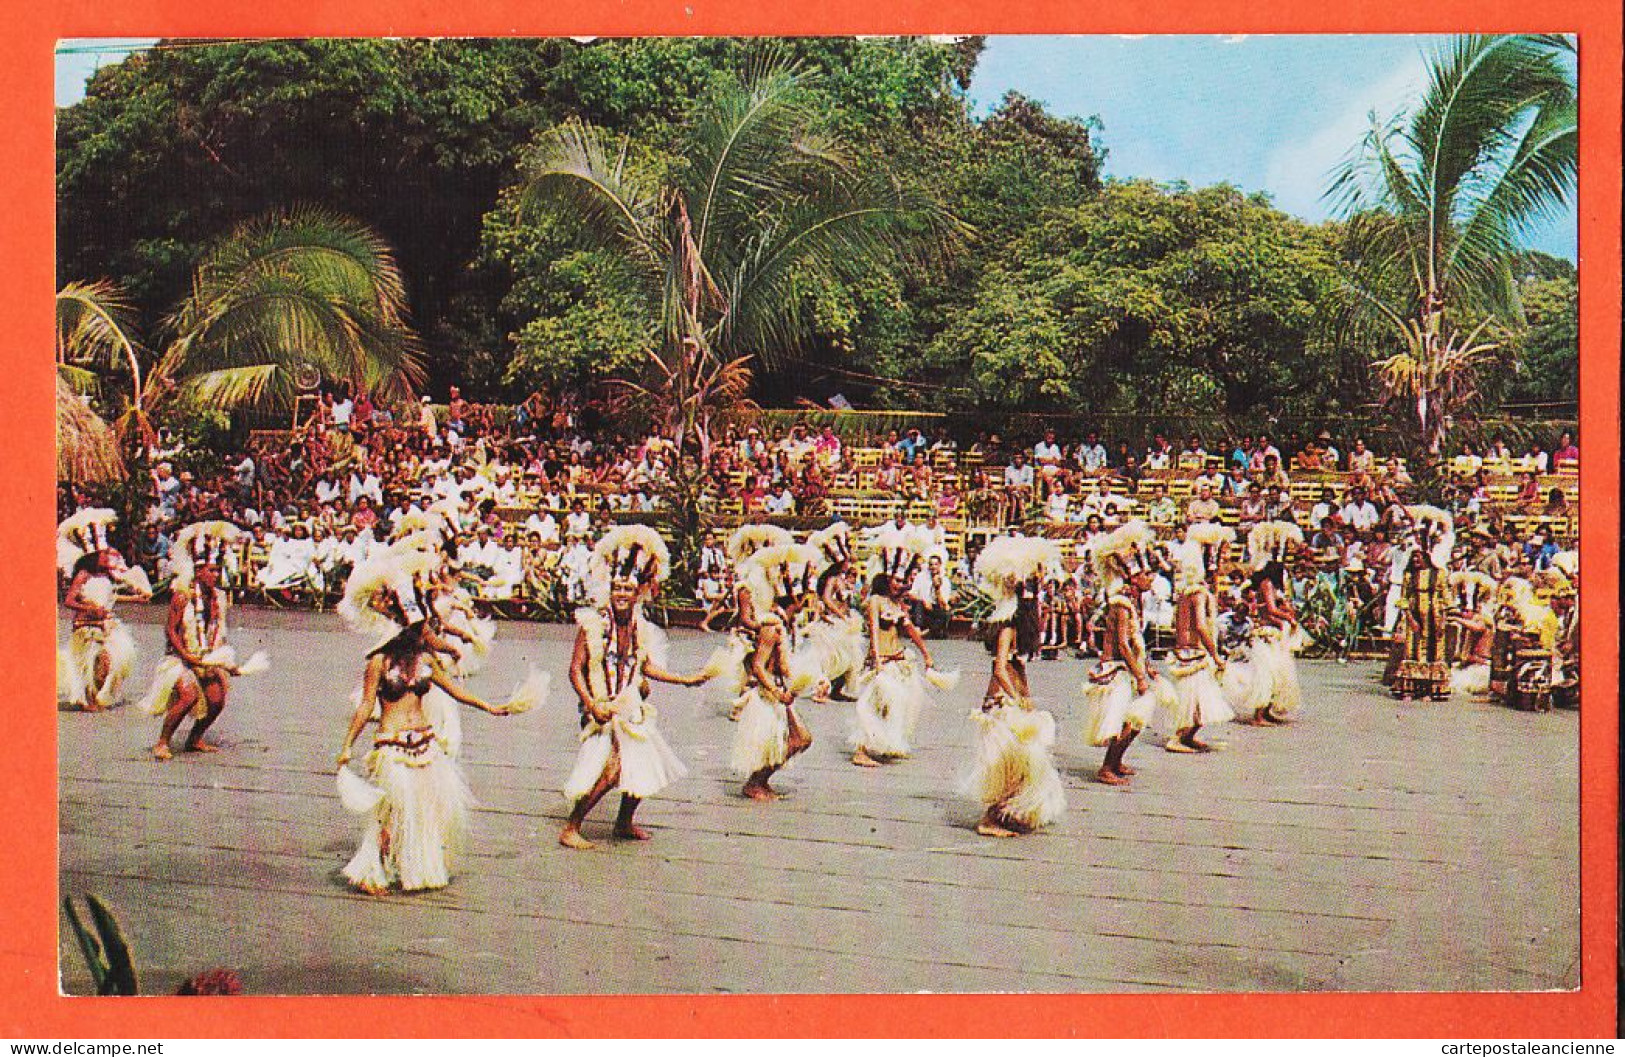 05651 ● TAHITI Océanie Groupe OTEA Professionnel HEIVA Professional Dancing Group 1980s Photo Afo GIAU C22908 - Tahiti